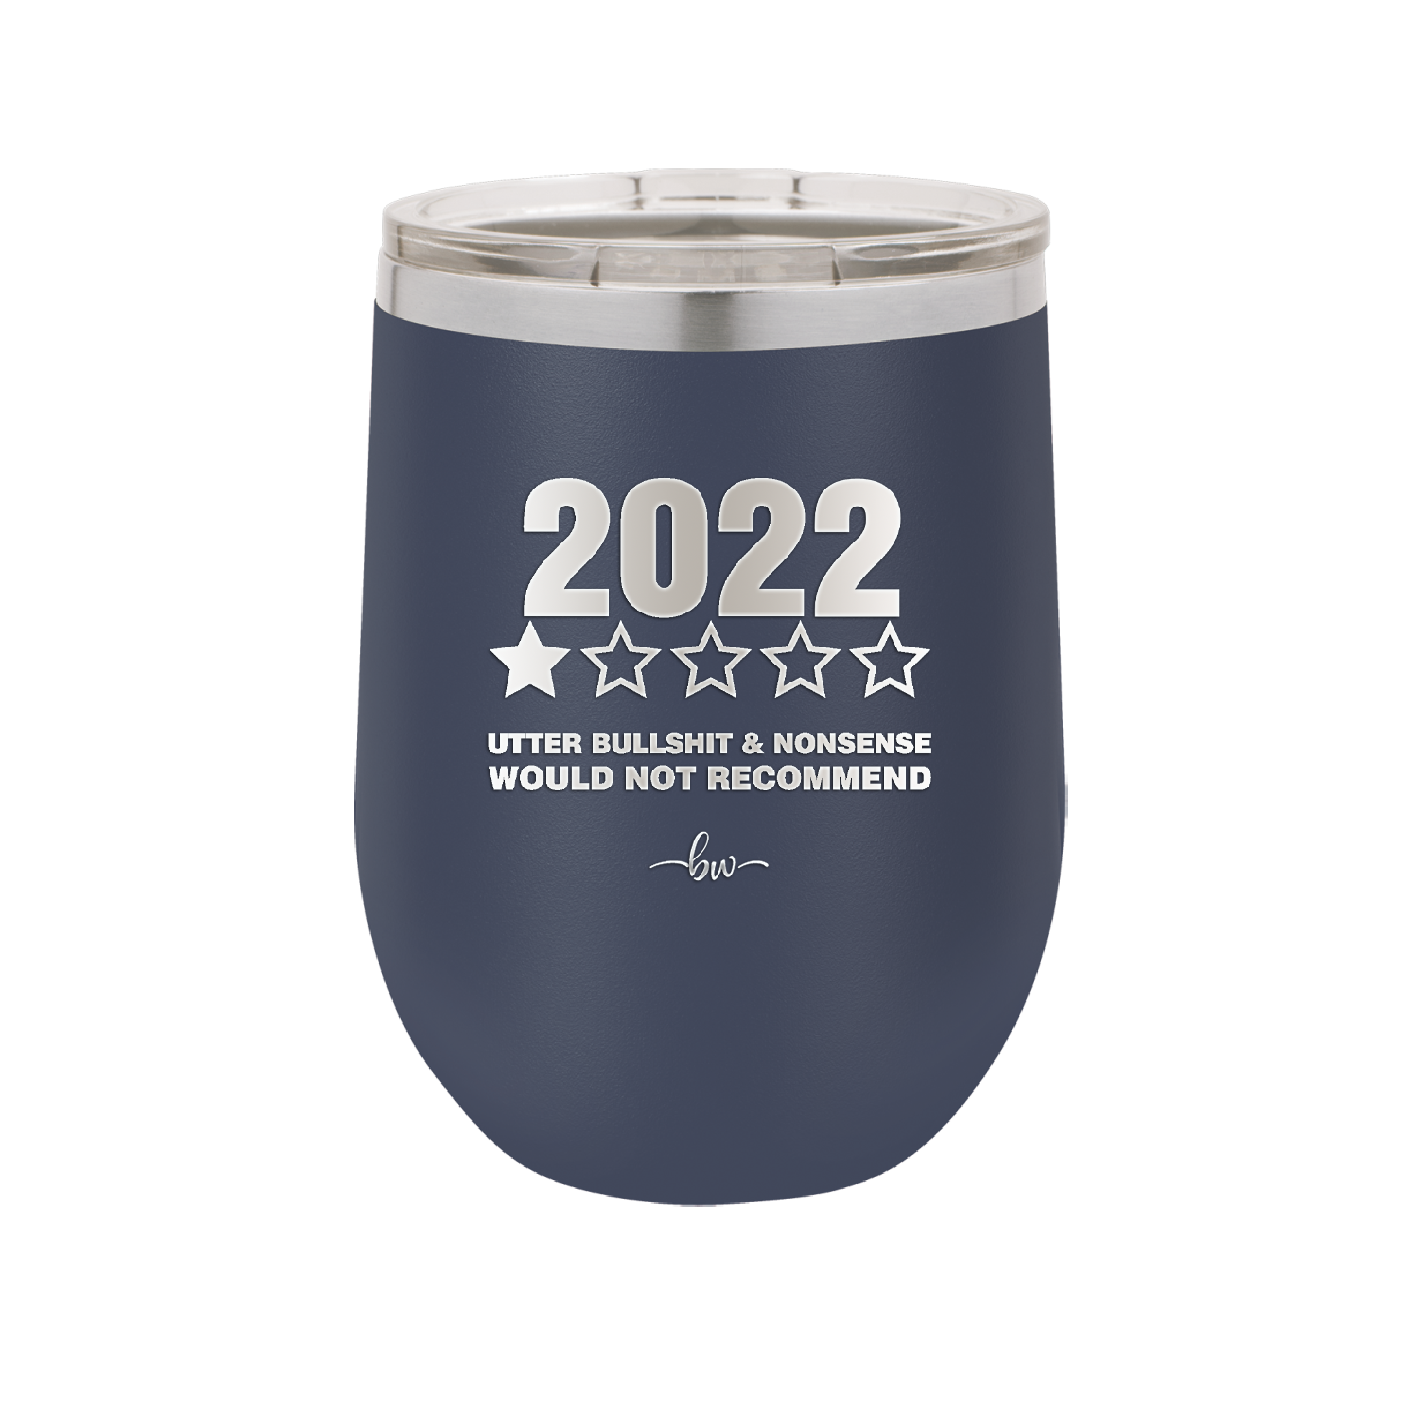 12 oz wine cup 2022 utter bullshitt and nonsense would not recommend - navy